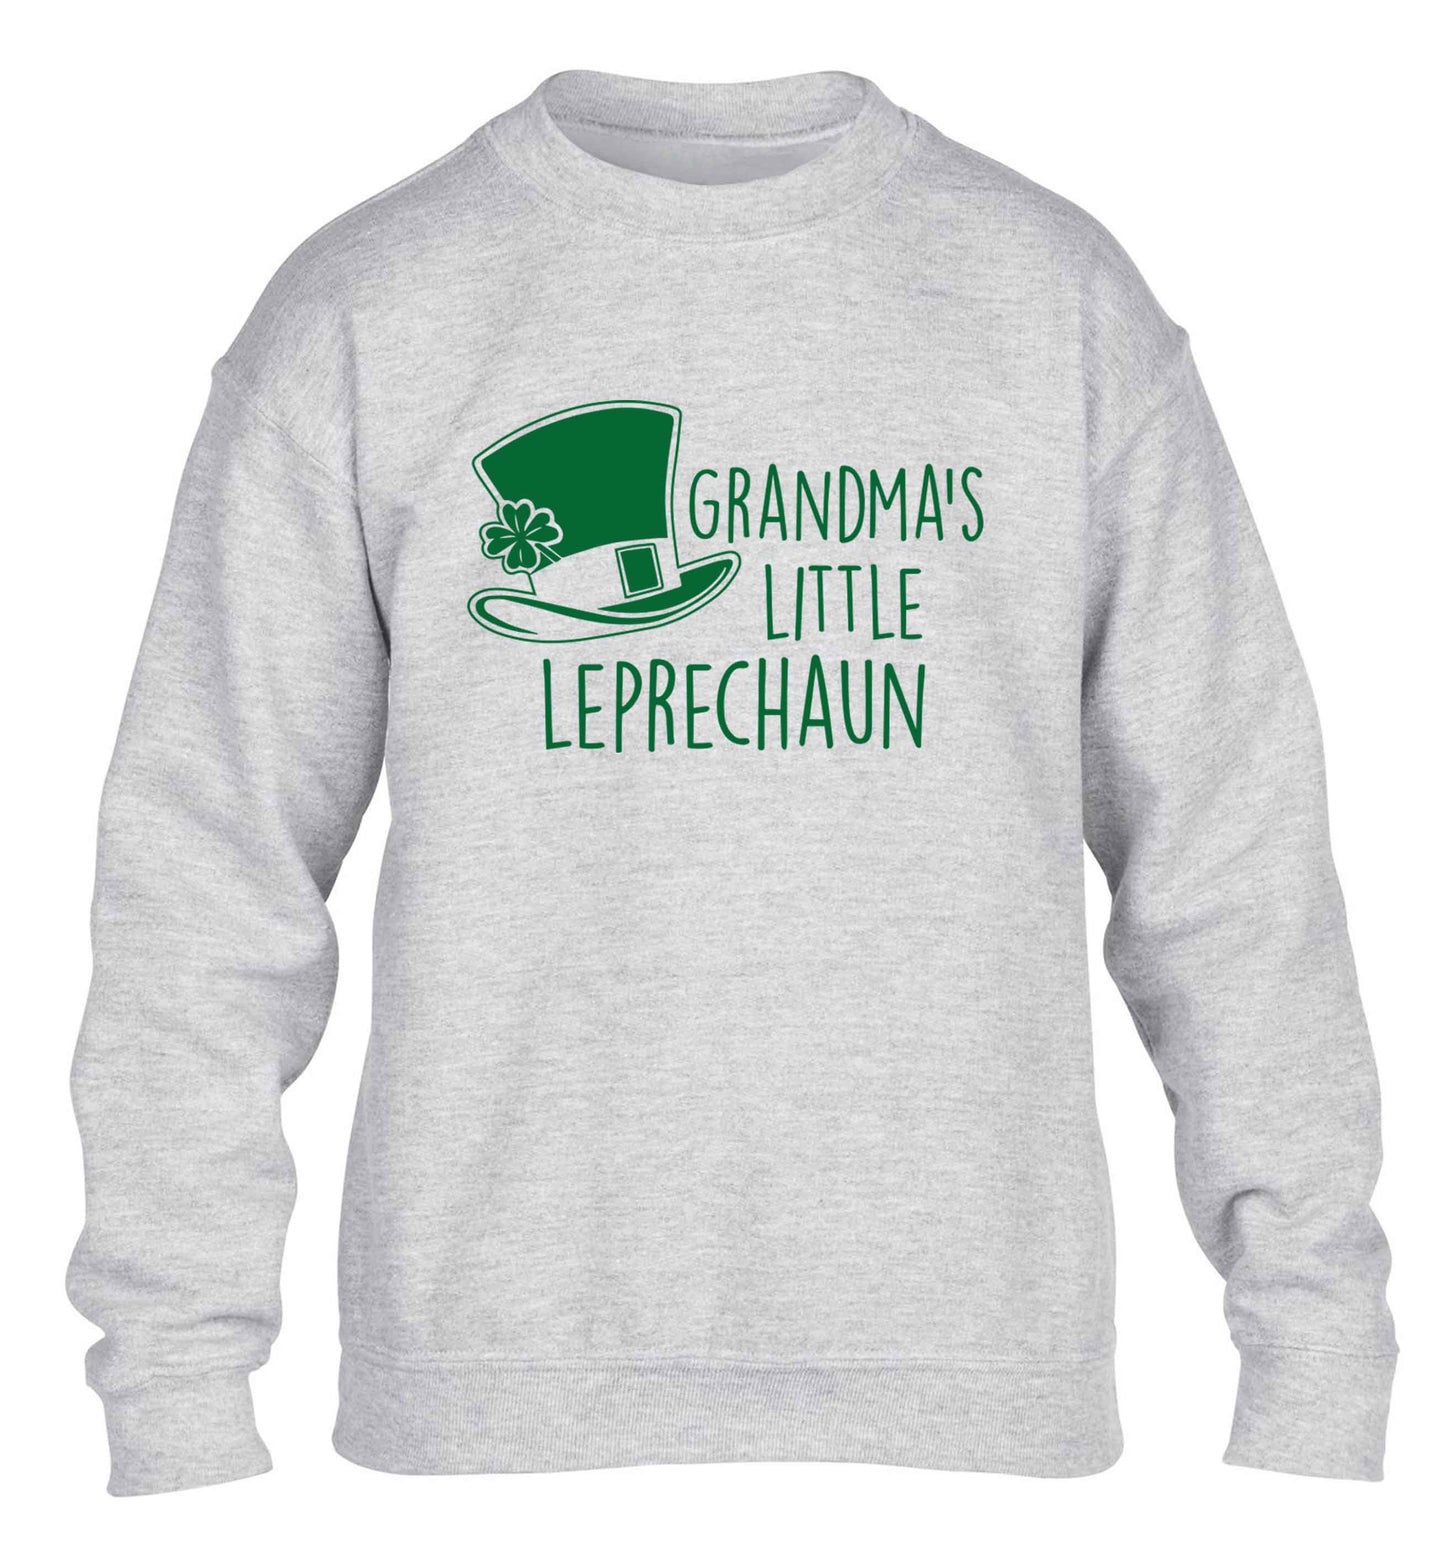 Grandma's little leprechaun children's grey sweater 12-13 Years